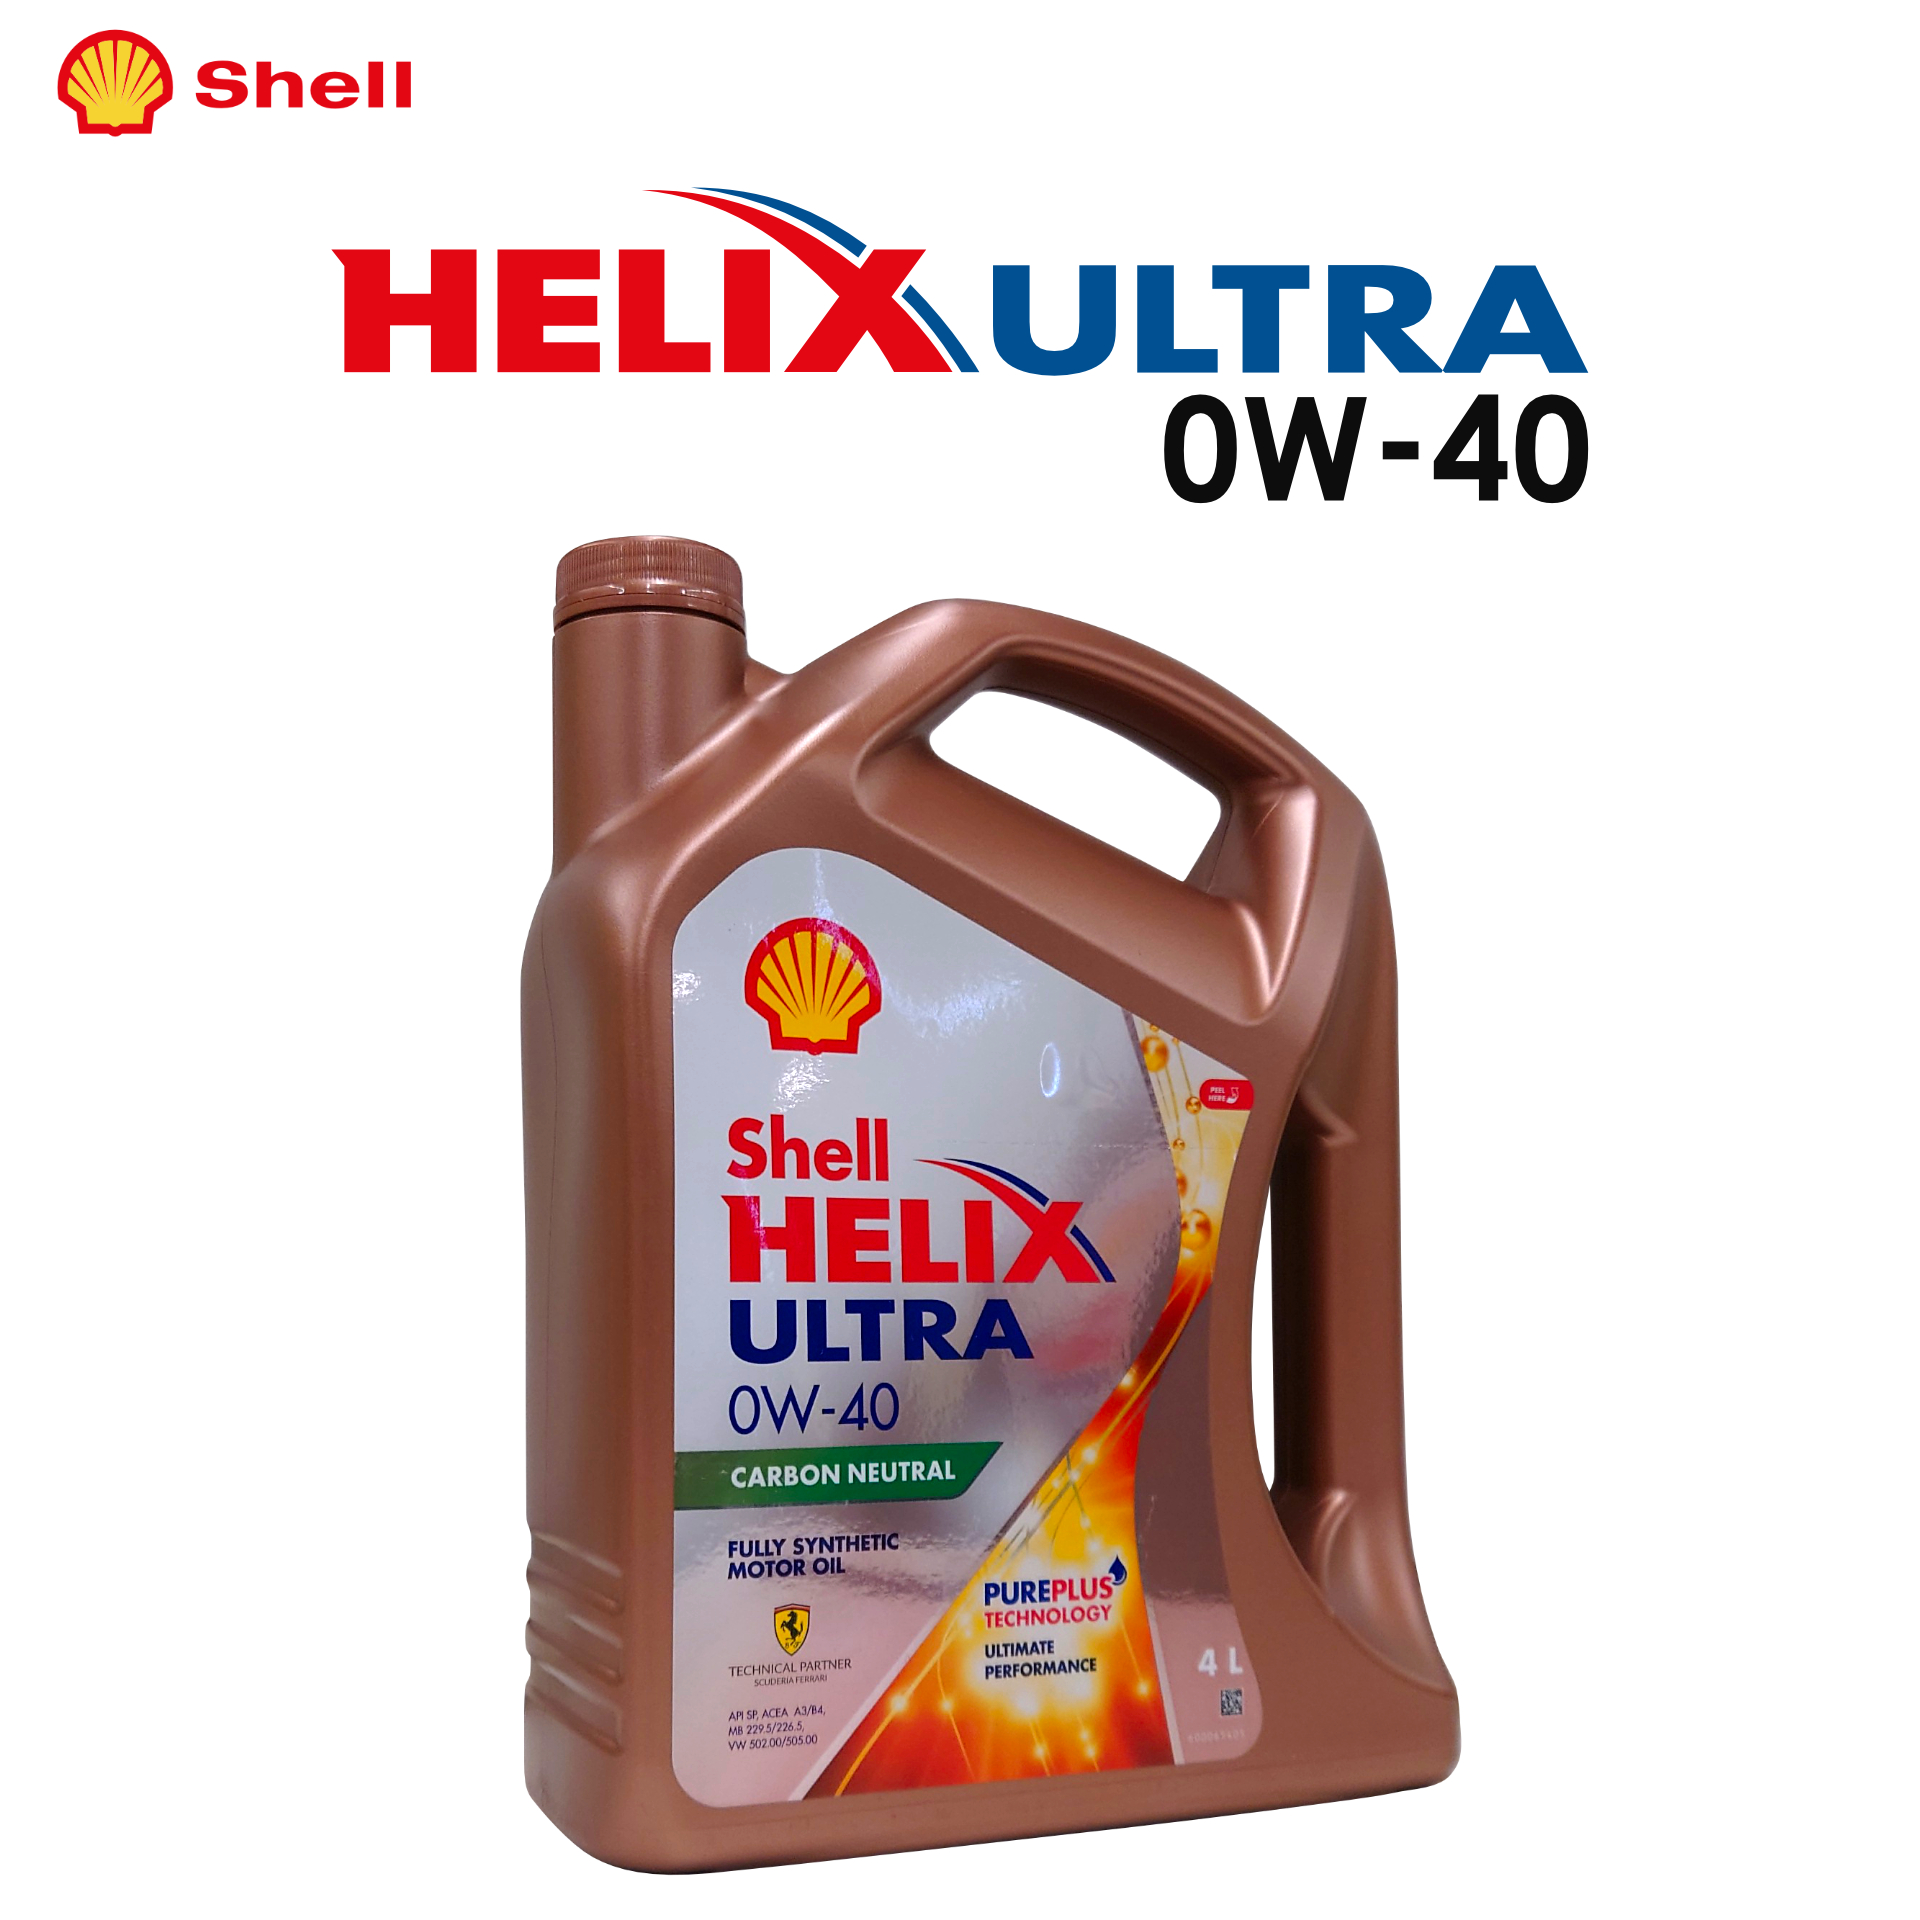 Shell HELIX ULTRA (シェル ヒリックス ウルトラ) 0W-40 4L エンジンオイル [並行輸入品]